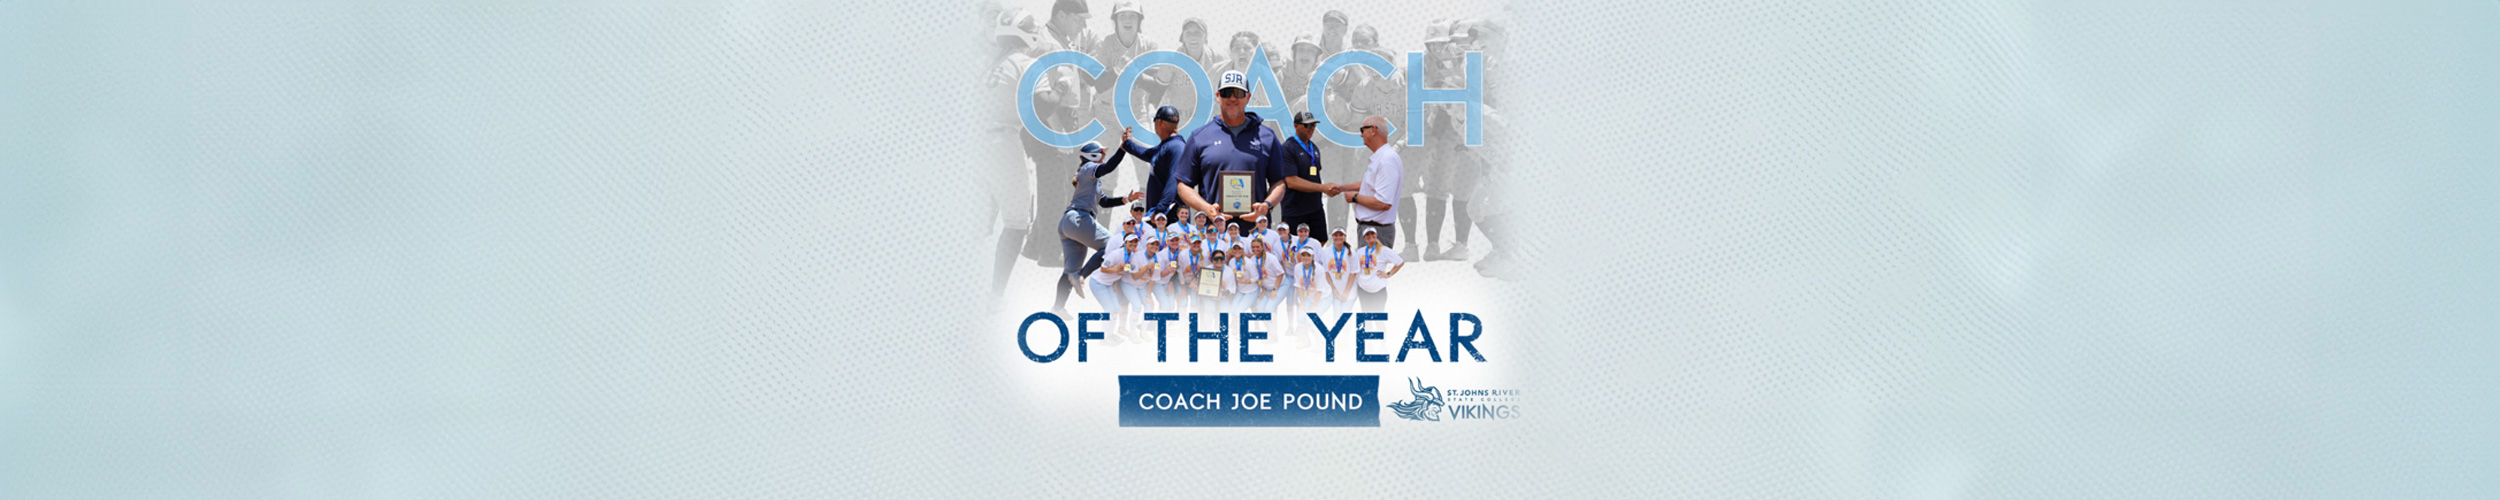 Joe Pound Coach of the Year